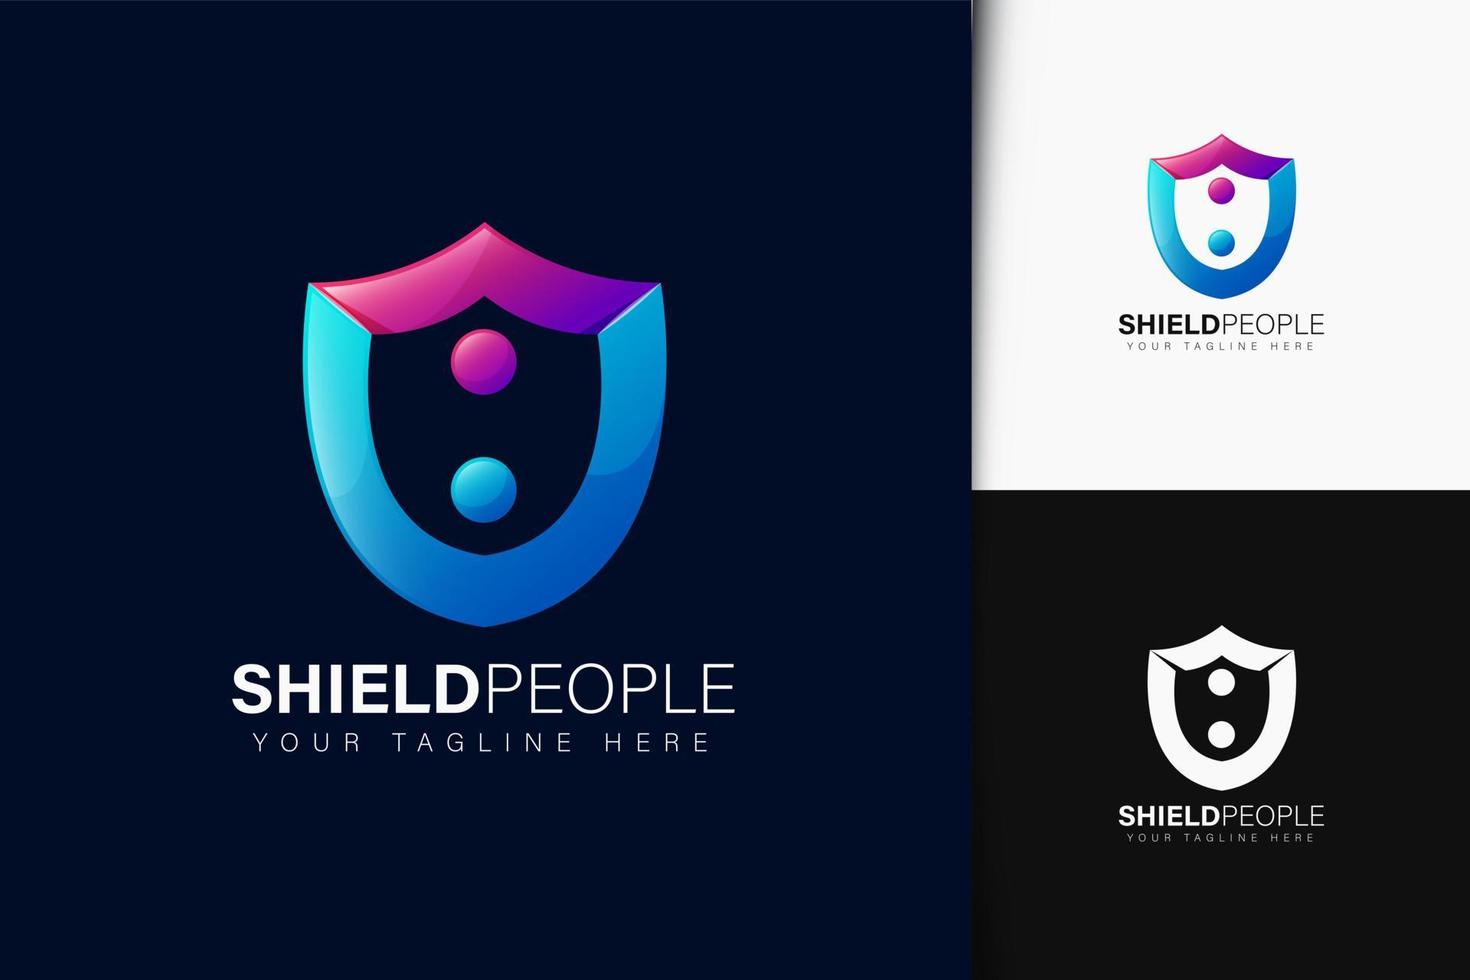 Shield people logo design with gradient vector